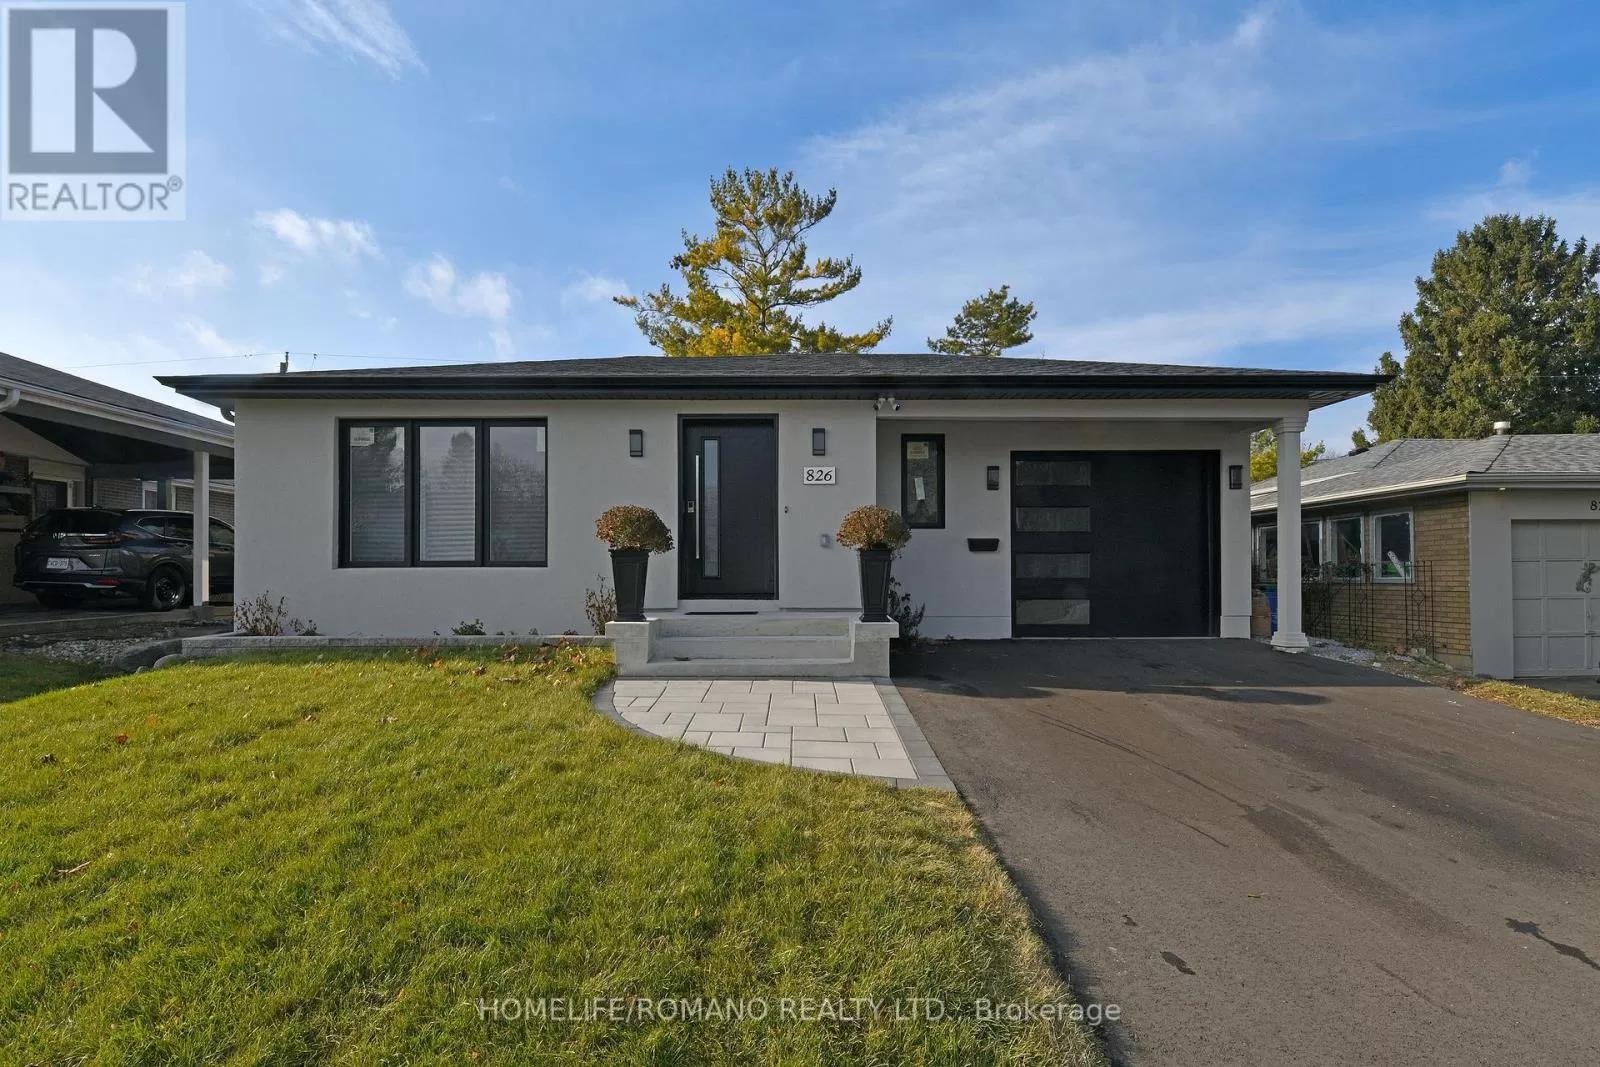 House for rent: 826 Krosno Blvd, Pickering, Ontario L1W 1G9